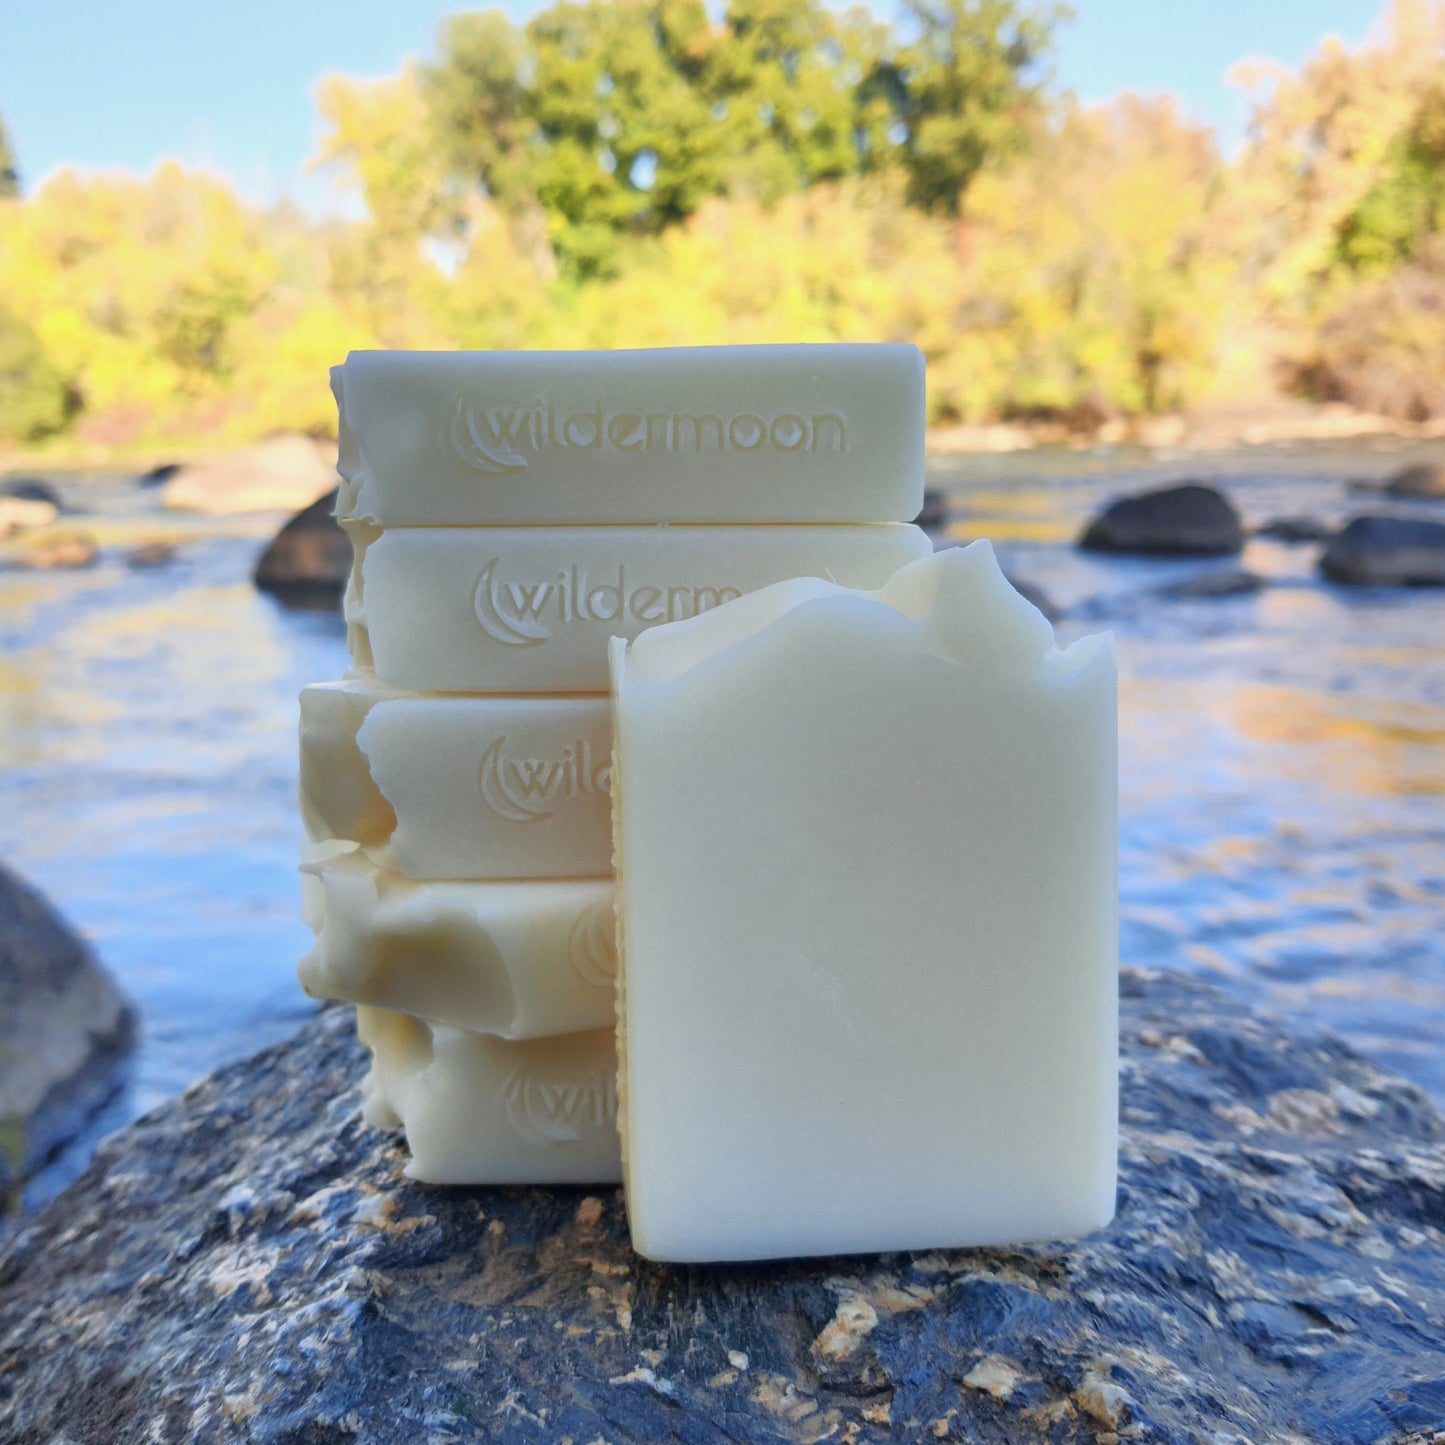 Camp soap. Rectangular white artisan soap with wildermoon logo stamp